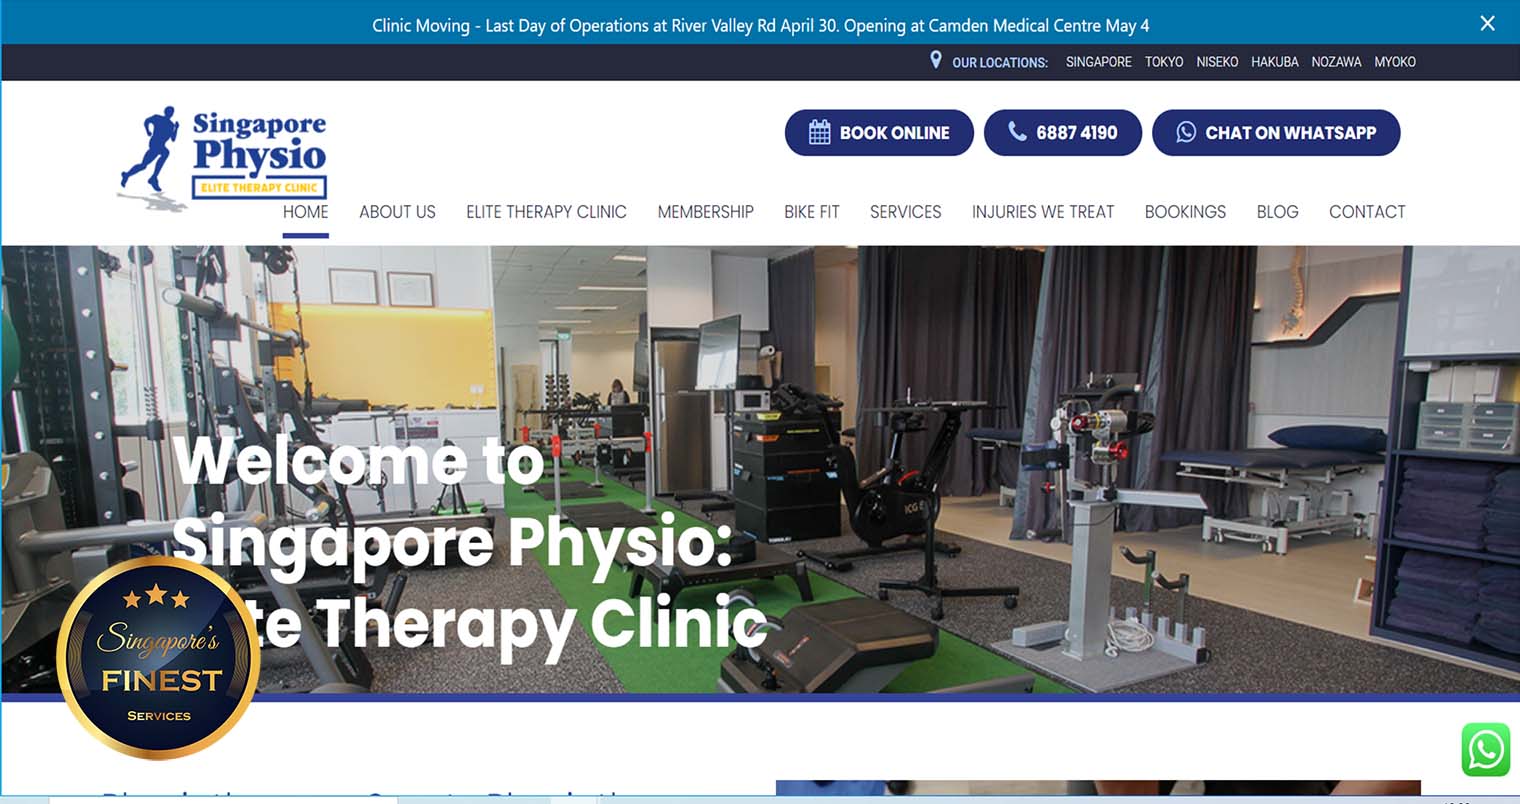 Singapore Physio - Physiotherapy Clinics Singapore